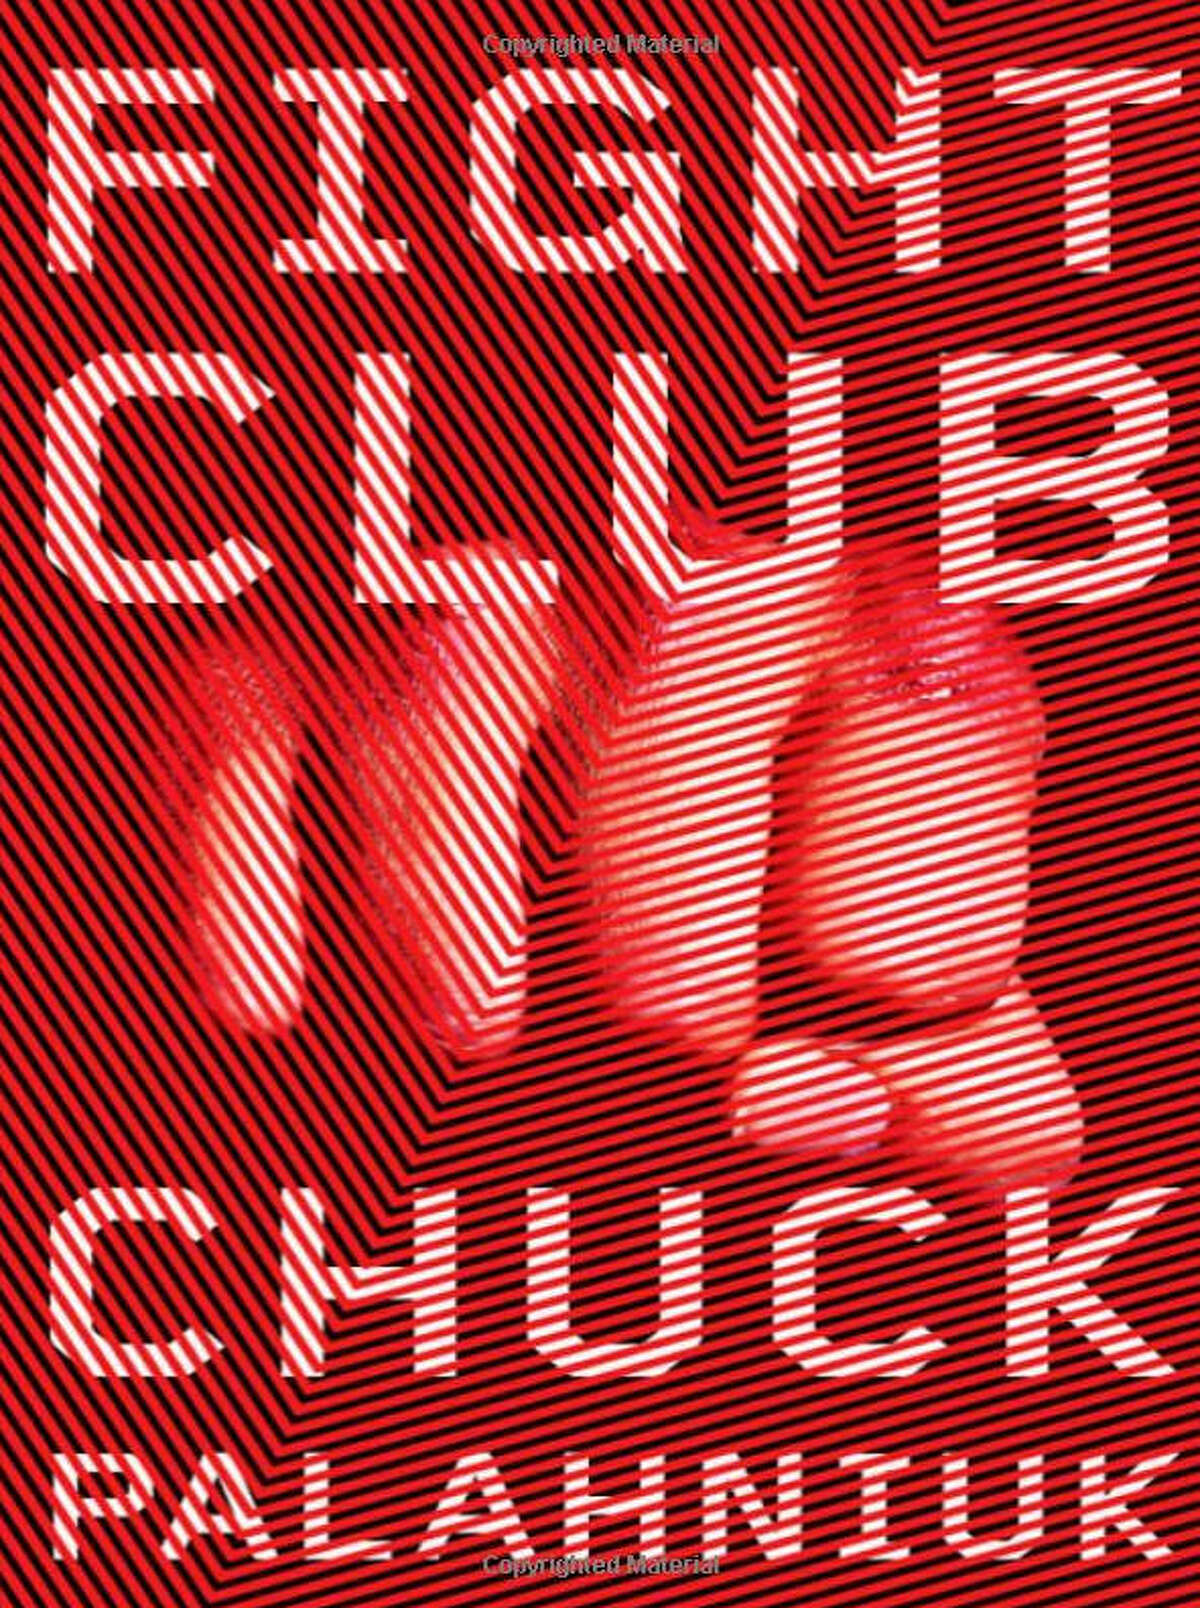 "Fight Club" By Chuck Palahniuk